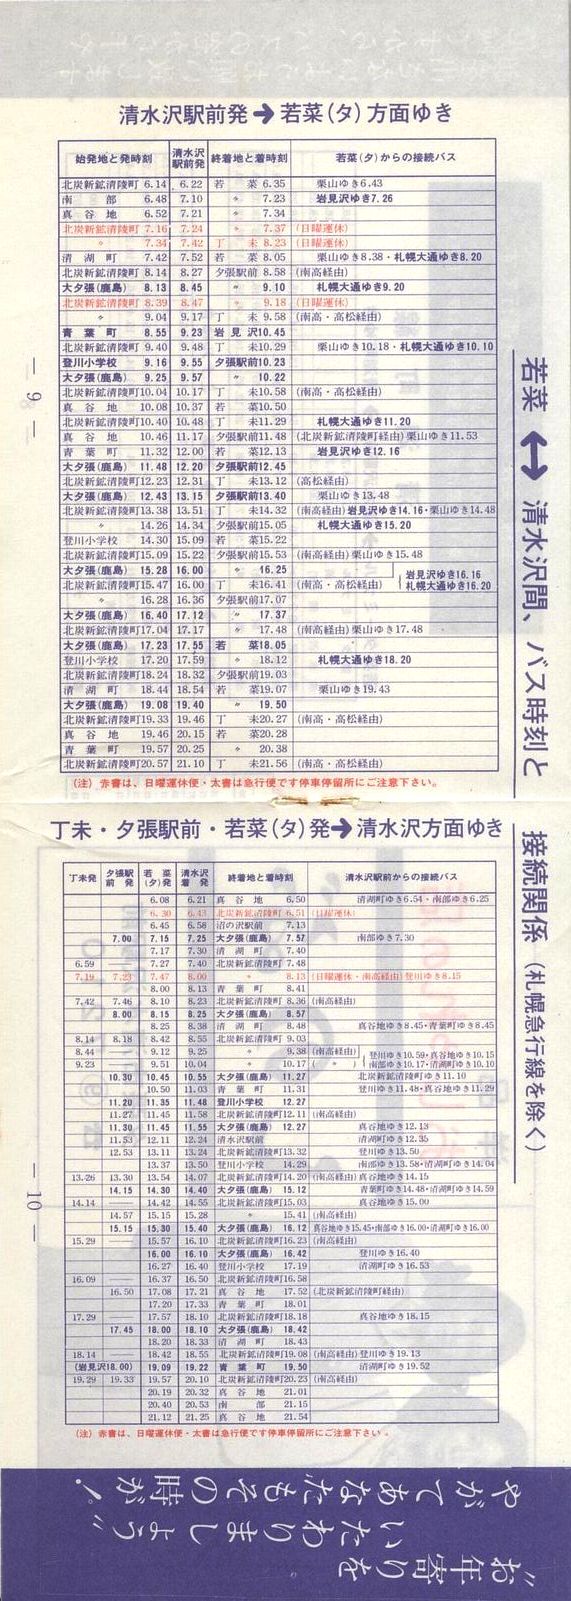 1978-09-26_[S_[EIRōq\_09-10